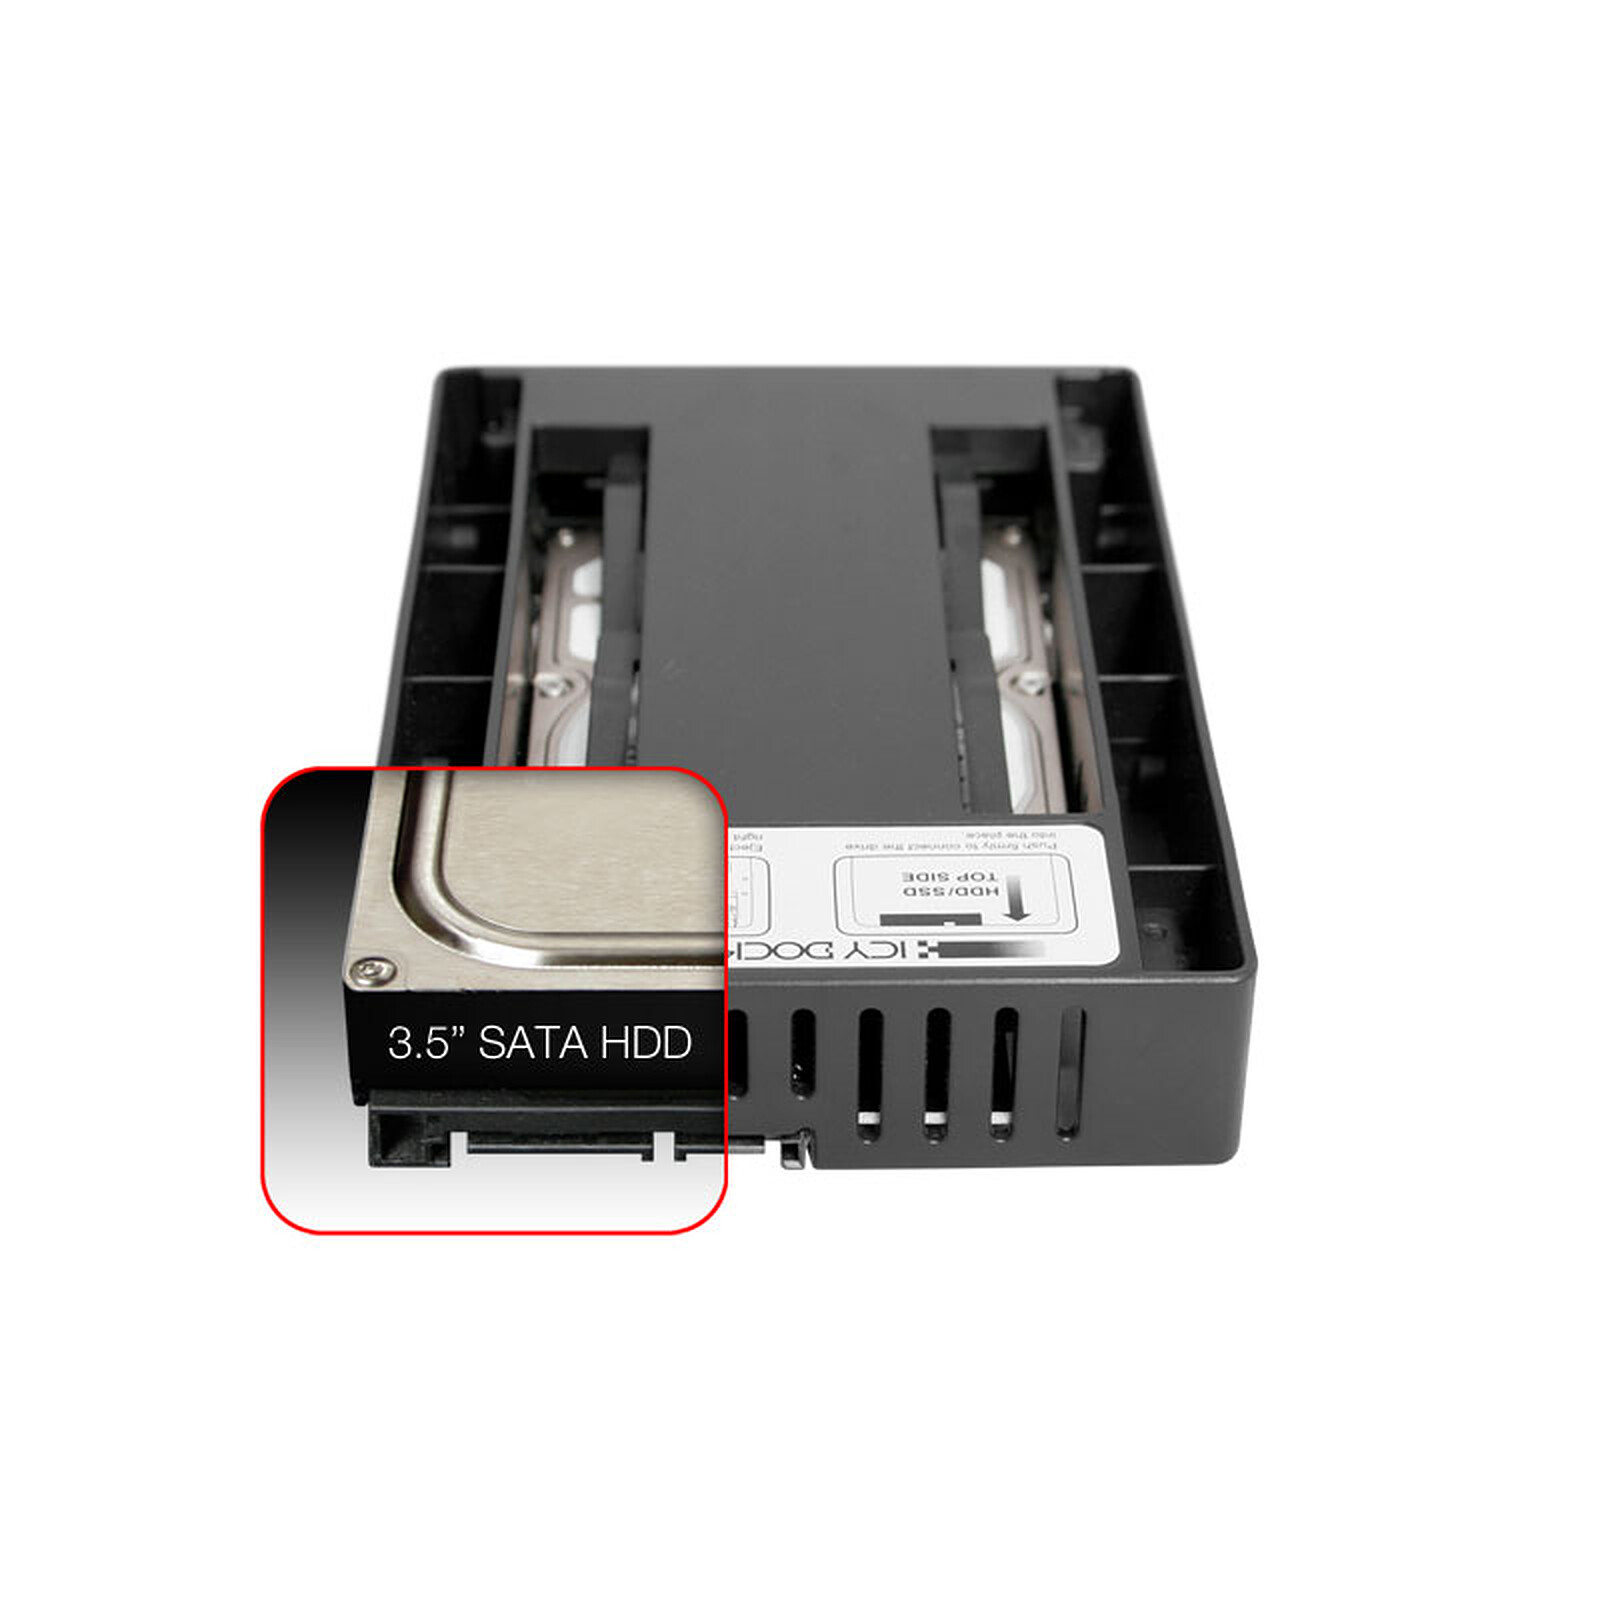 INOVU Dual Dock QS Station V2 - Accessoires disque dur - Garantie 3 ans  LDLC